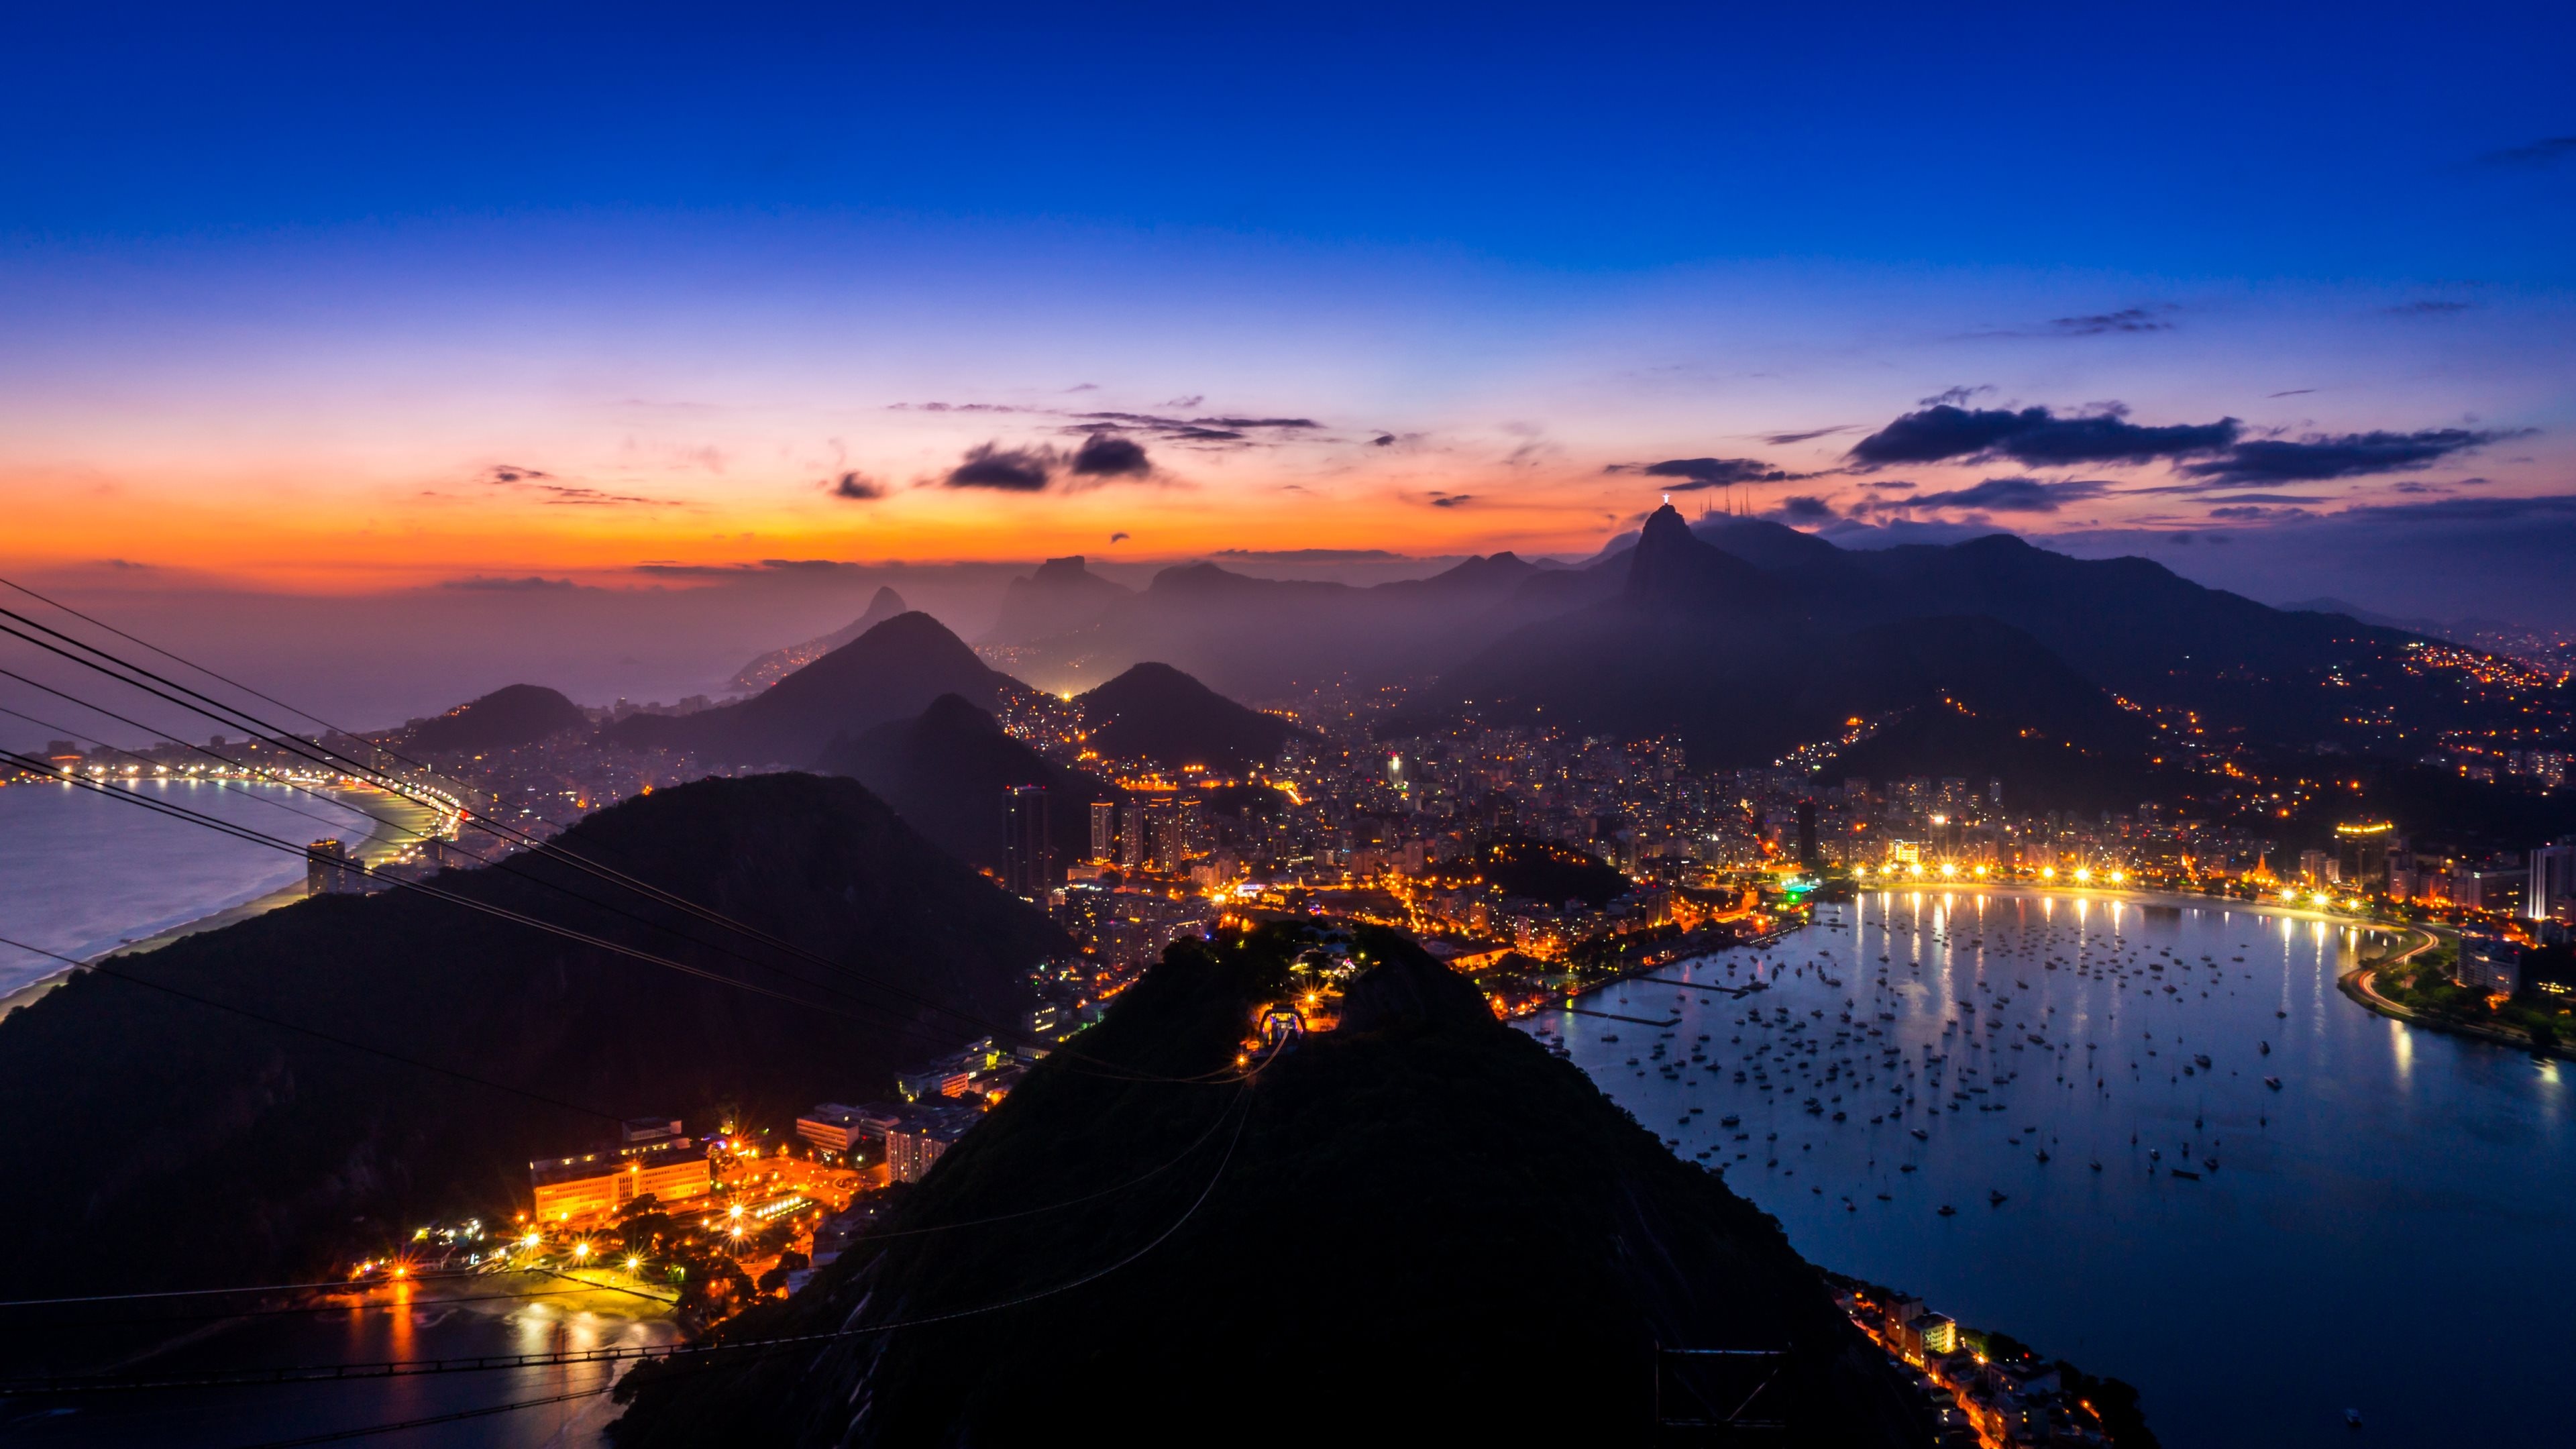 Greetings from Rio de Janeiro, HD wallpapers, 4K wallpapers,, 3840x2160 4K Desktop